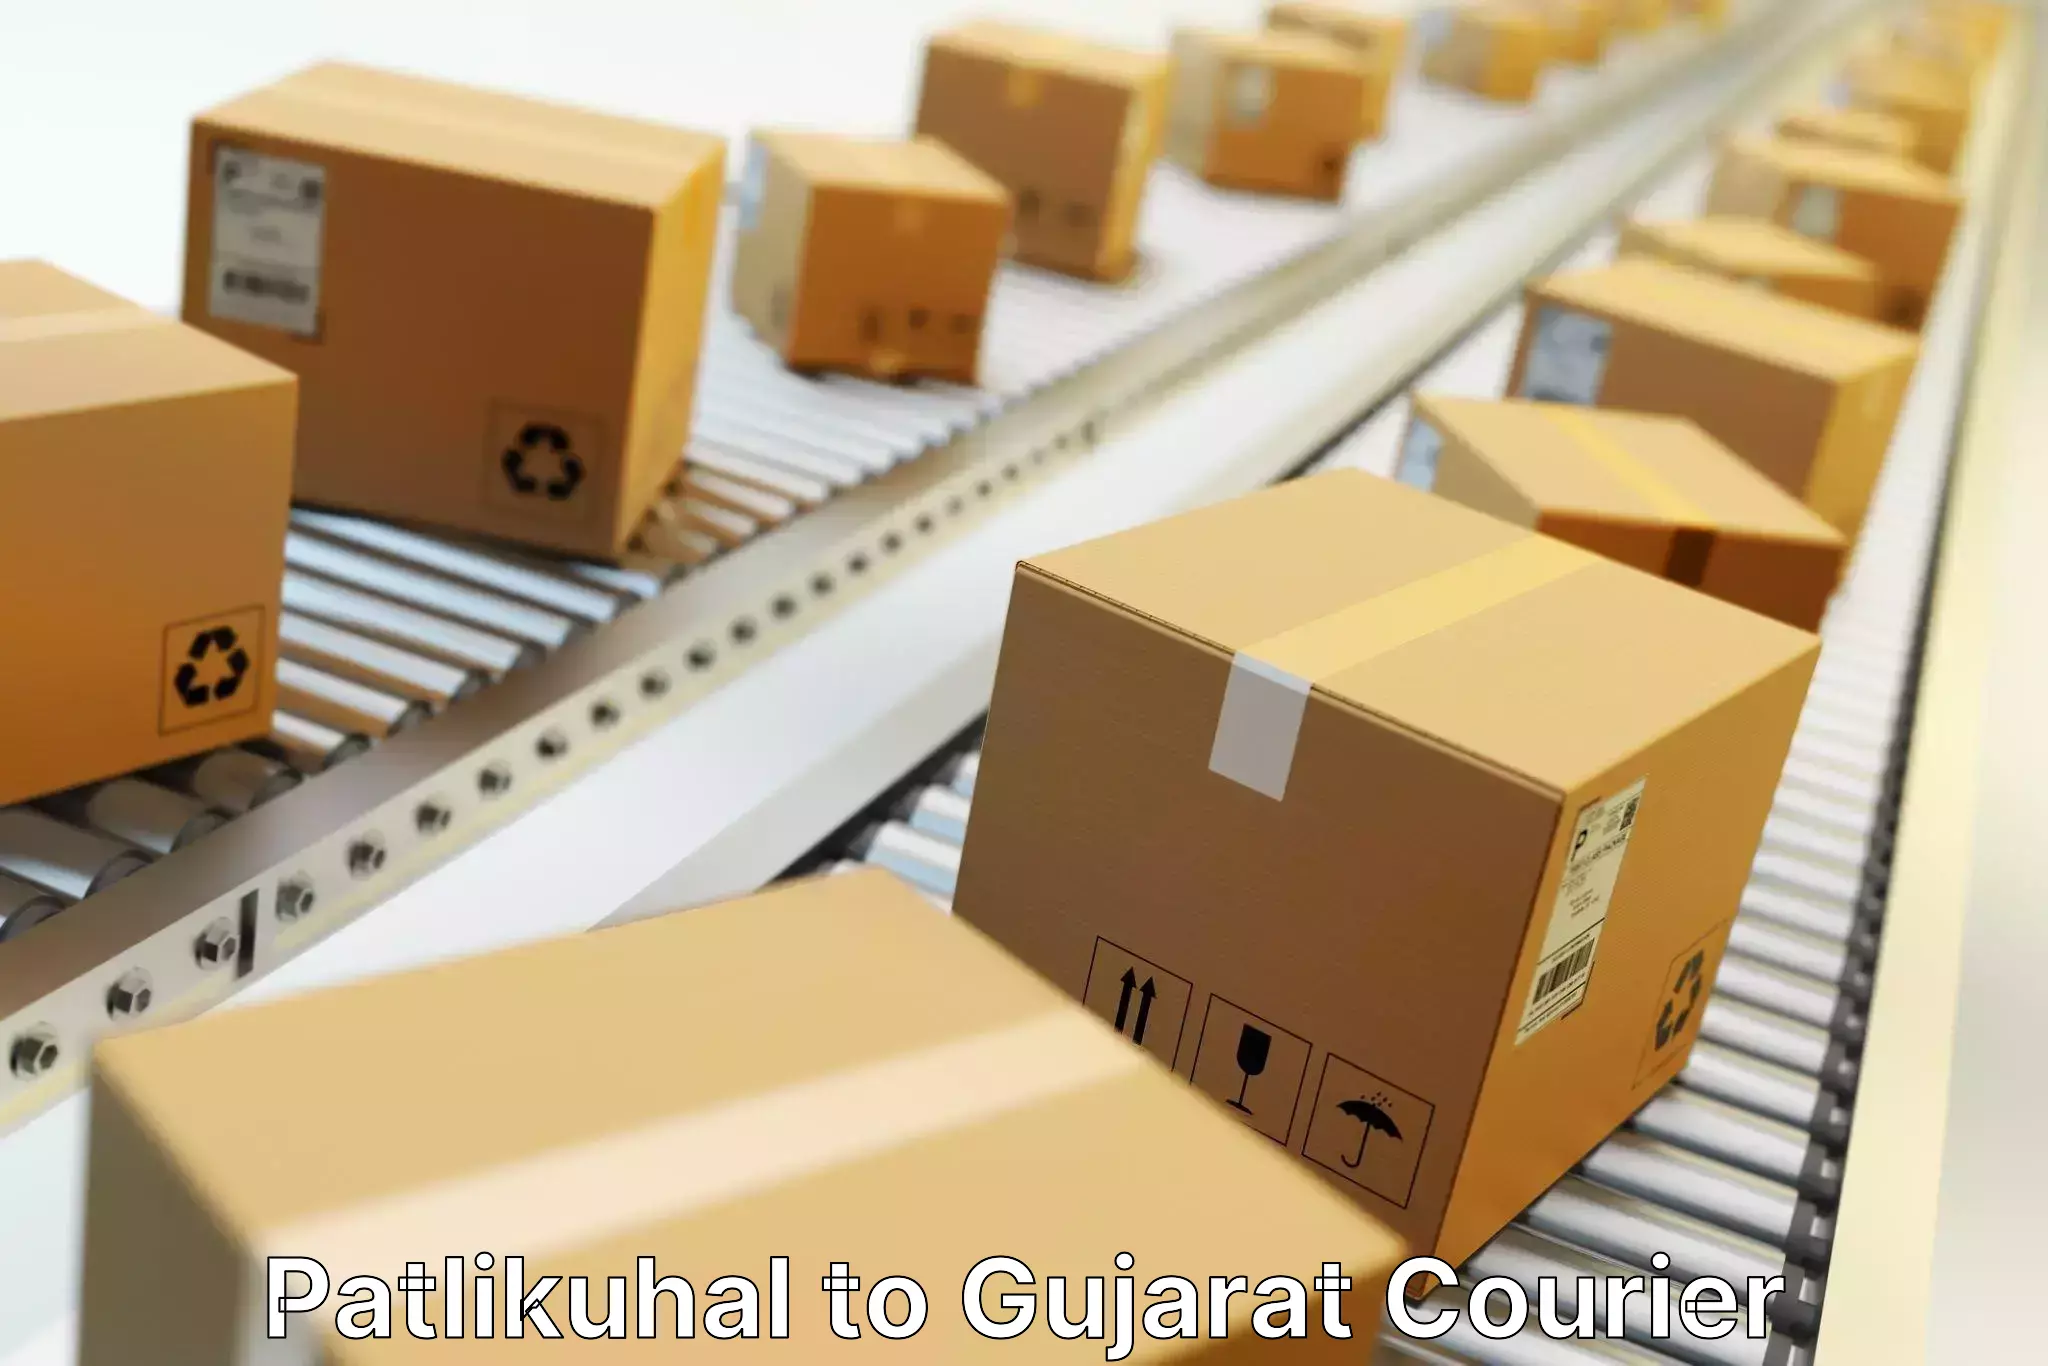 Cash on delivery service Patlikuhal to Gujarat